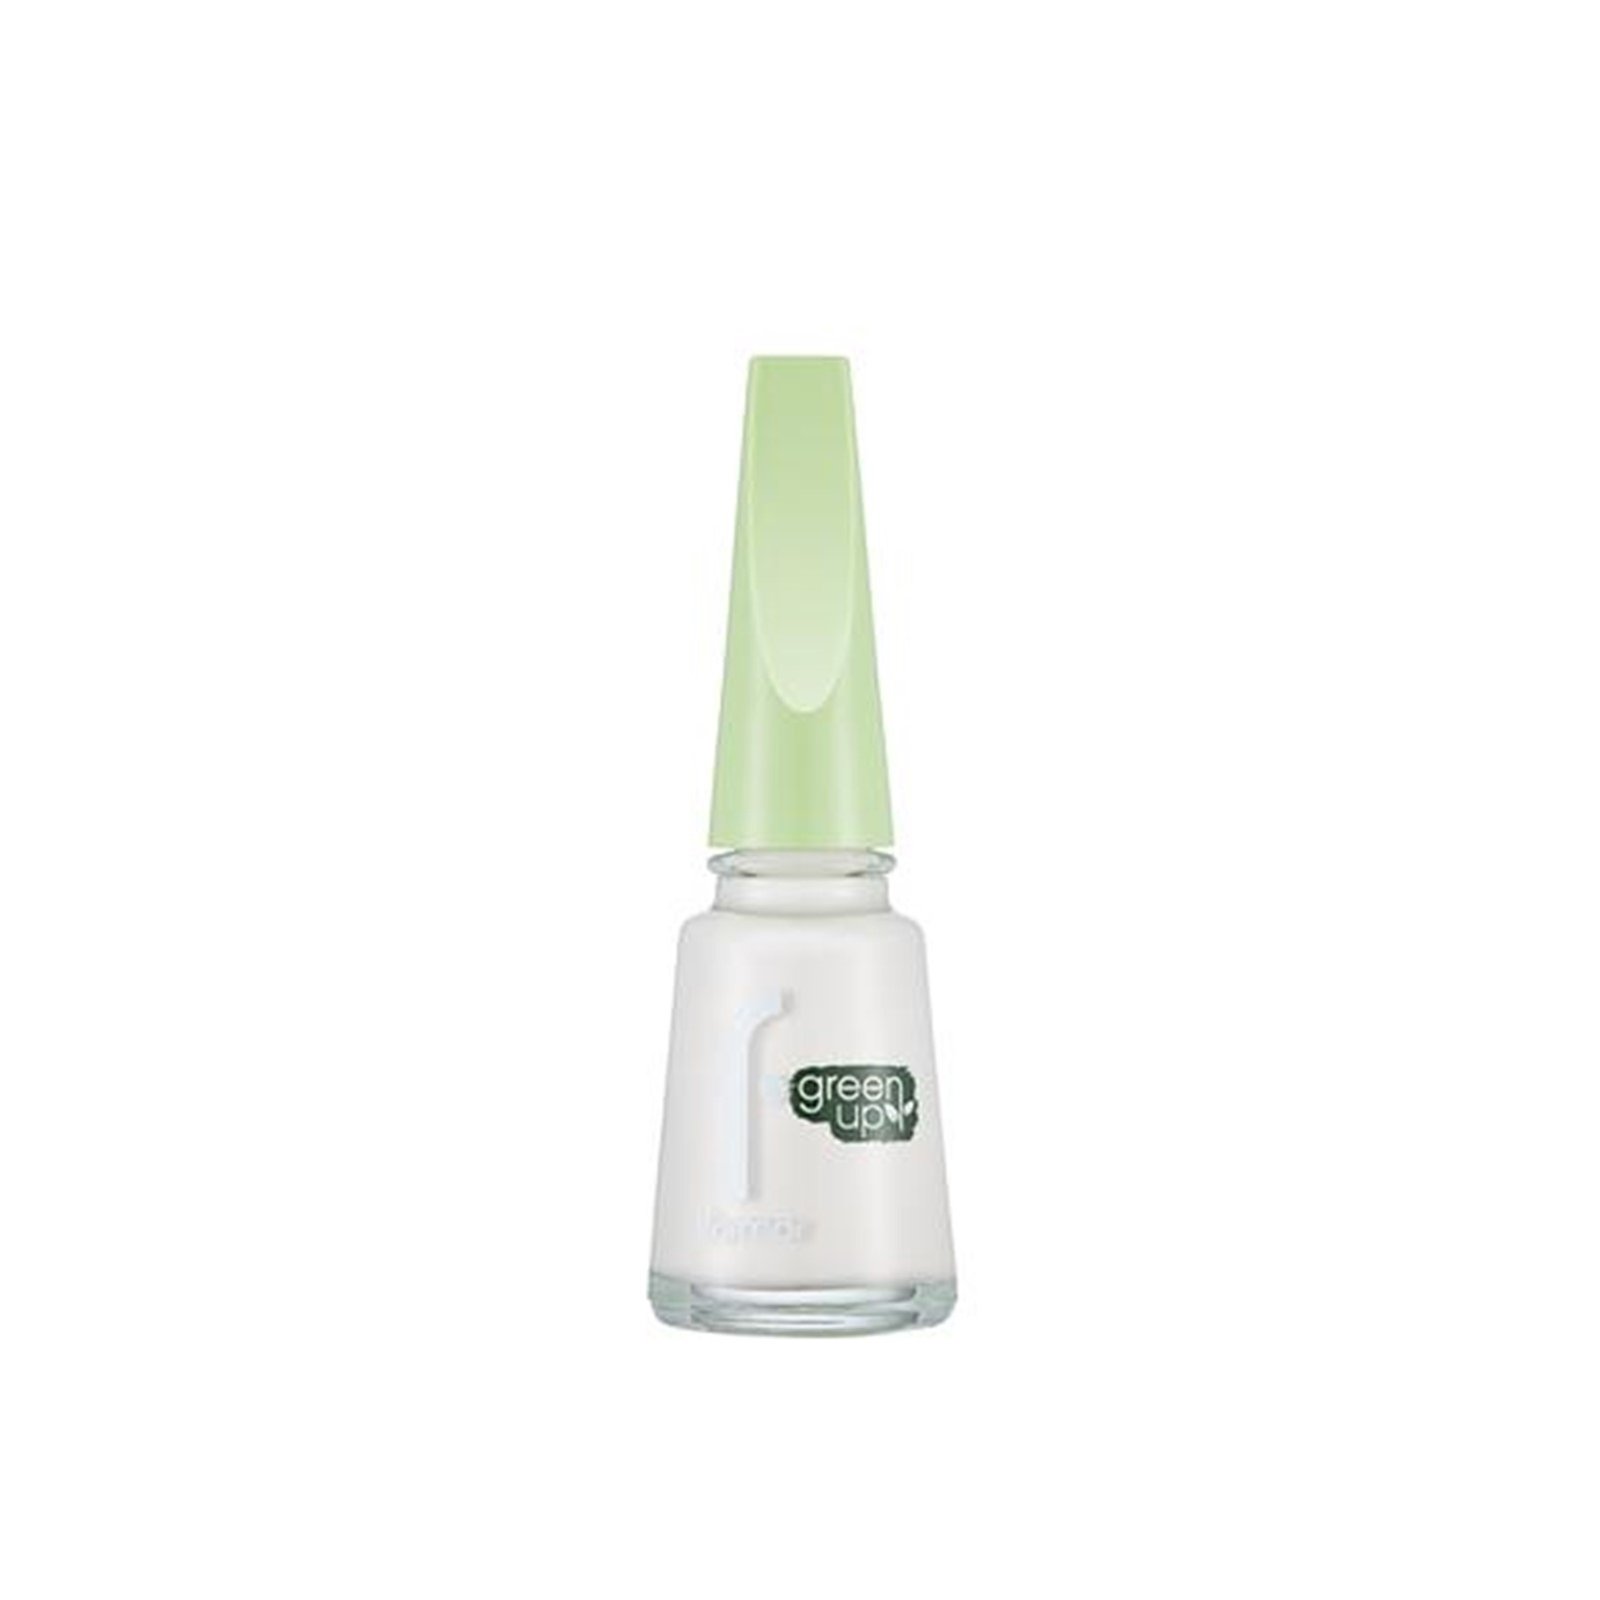 Flormar Green Up Nail Enamel 002 White Hydrangea 11ml (0.37 fl oz)